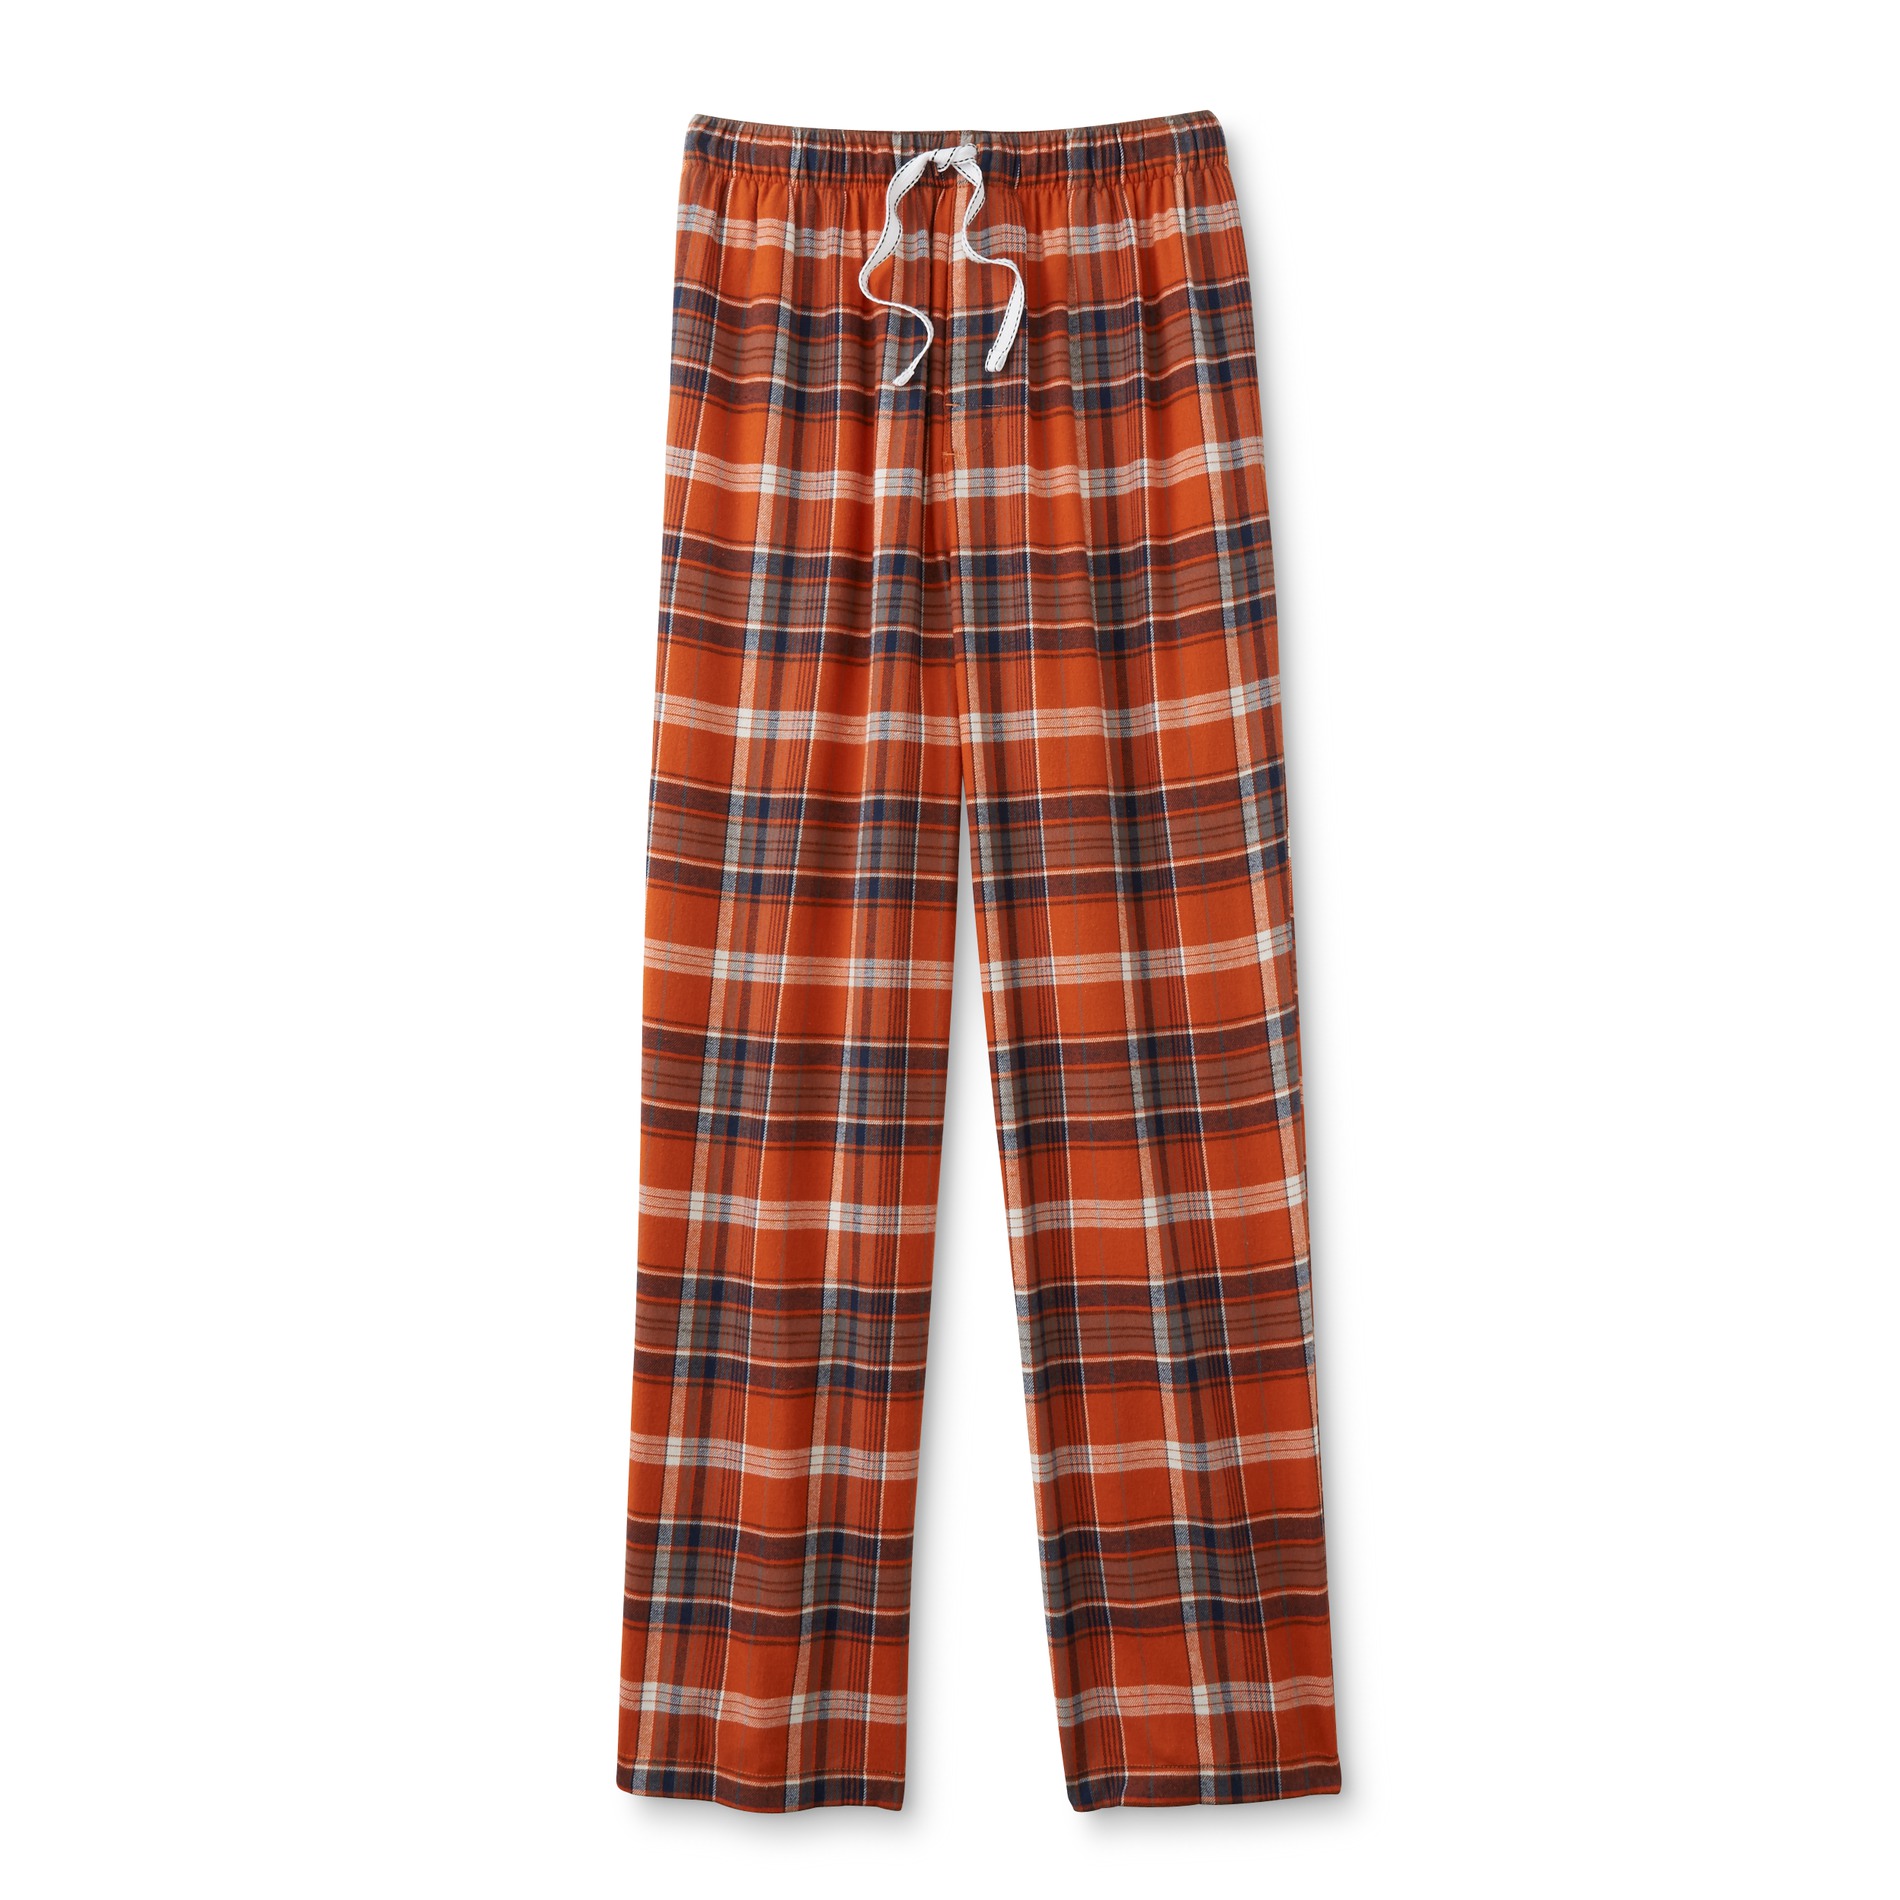 Northwest Territory Men's Big & Tall Flannel Pajama Pants - Plaid